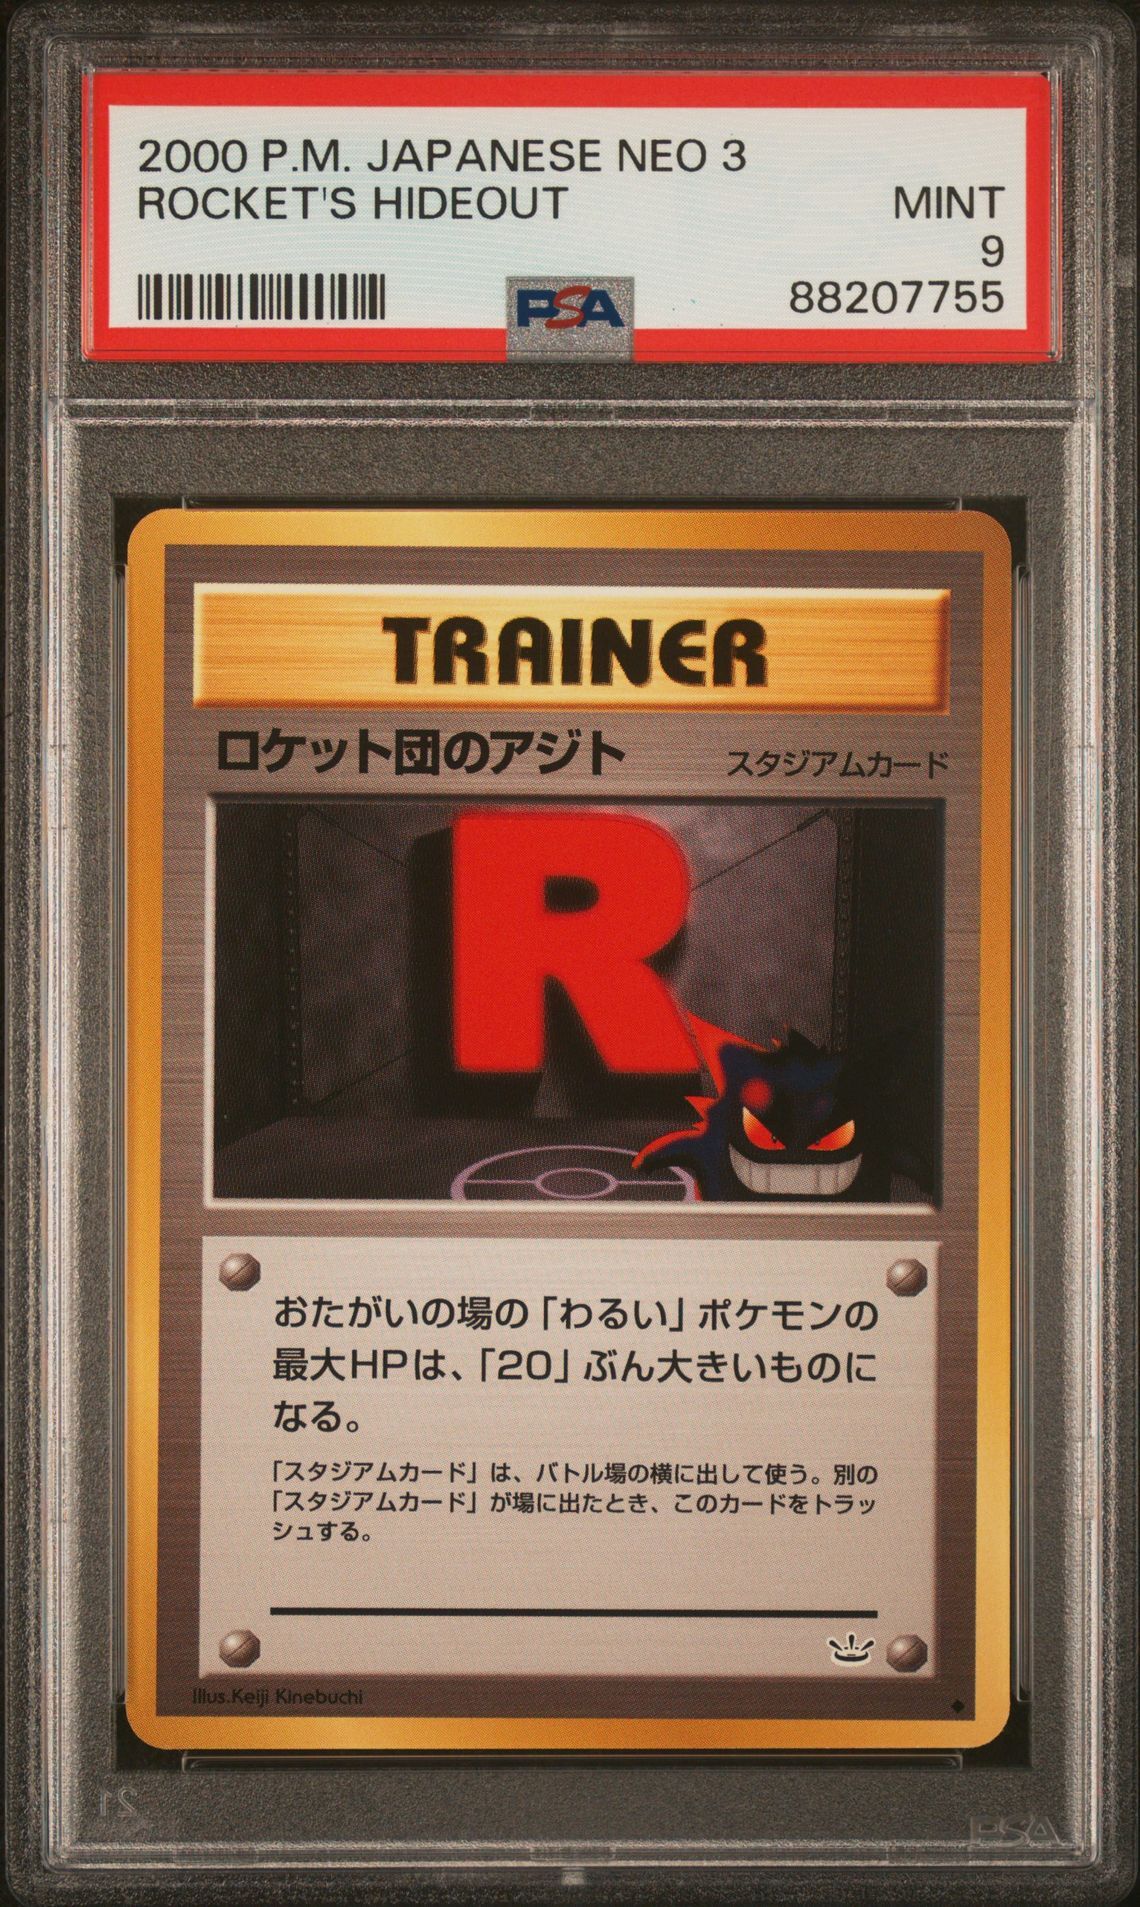 2000 POKEMON JAPANESE NEO 3 ROCKET'S HIDEOUT - PSA 9 MINT - Pokémon